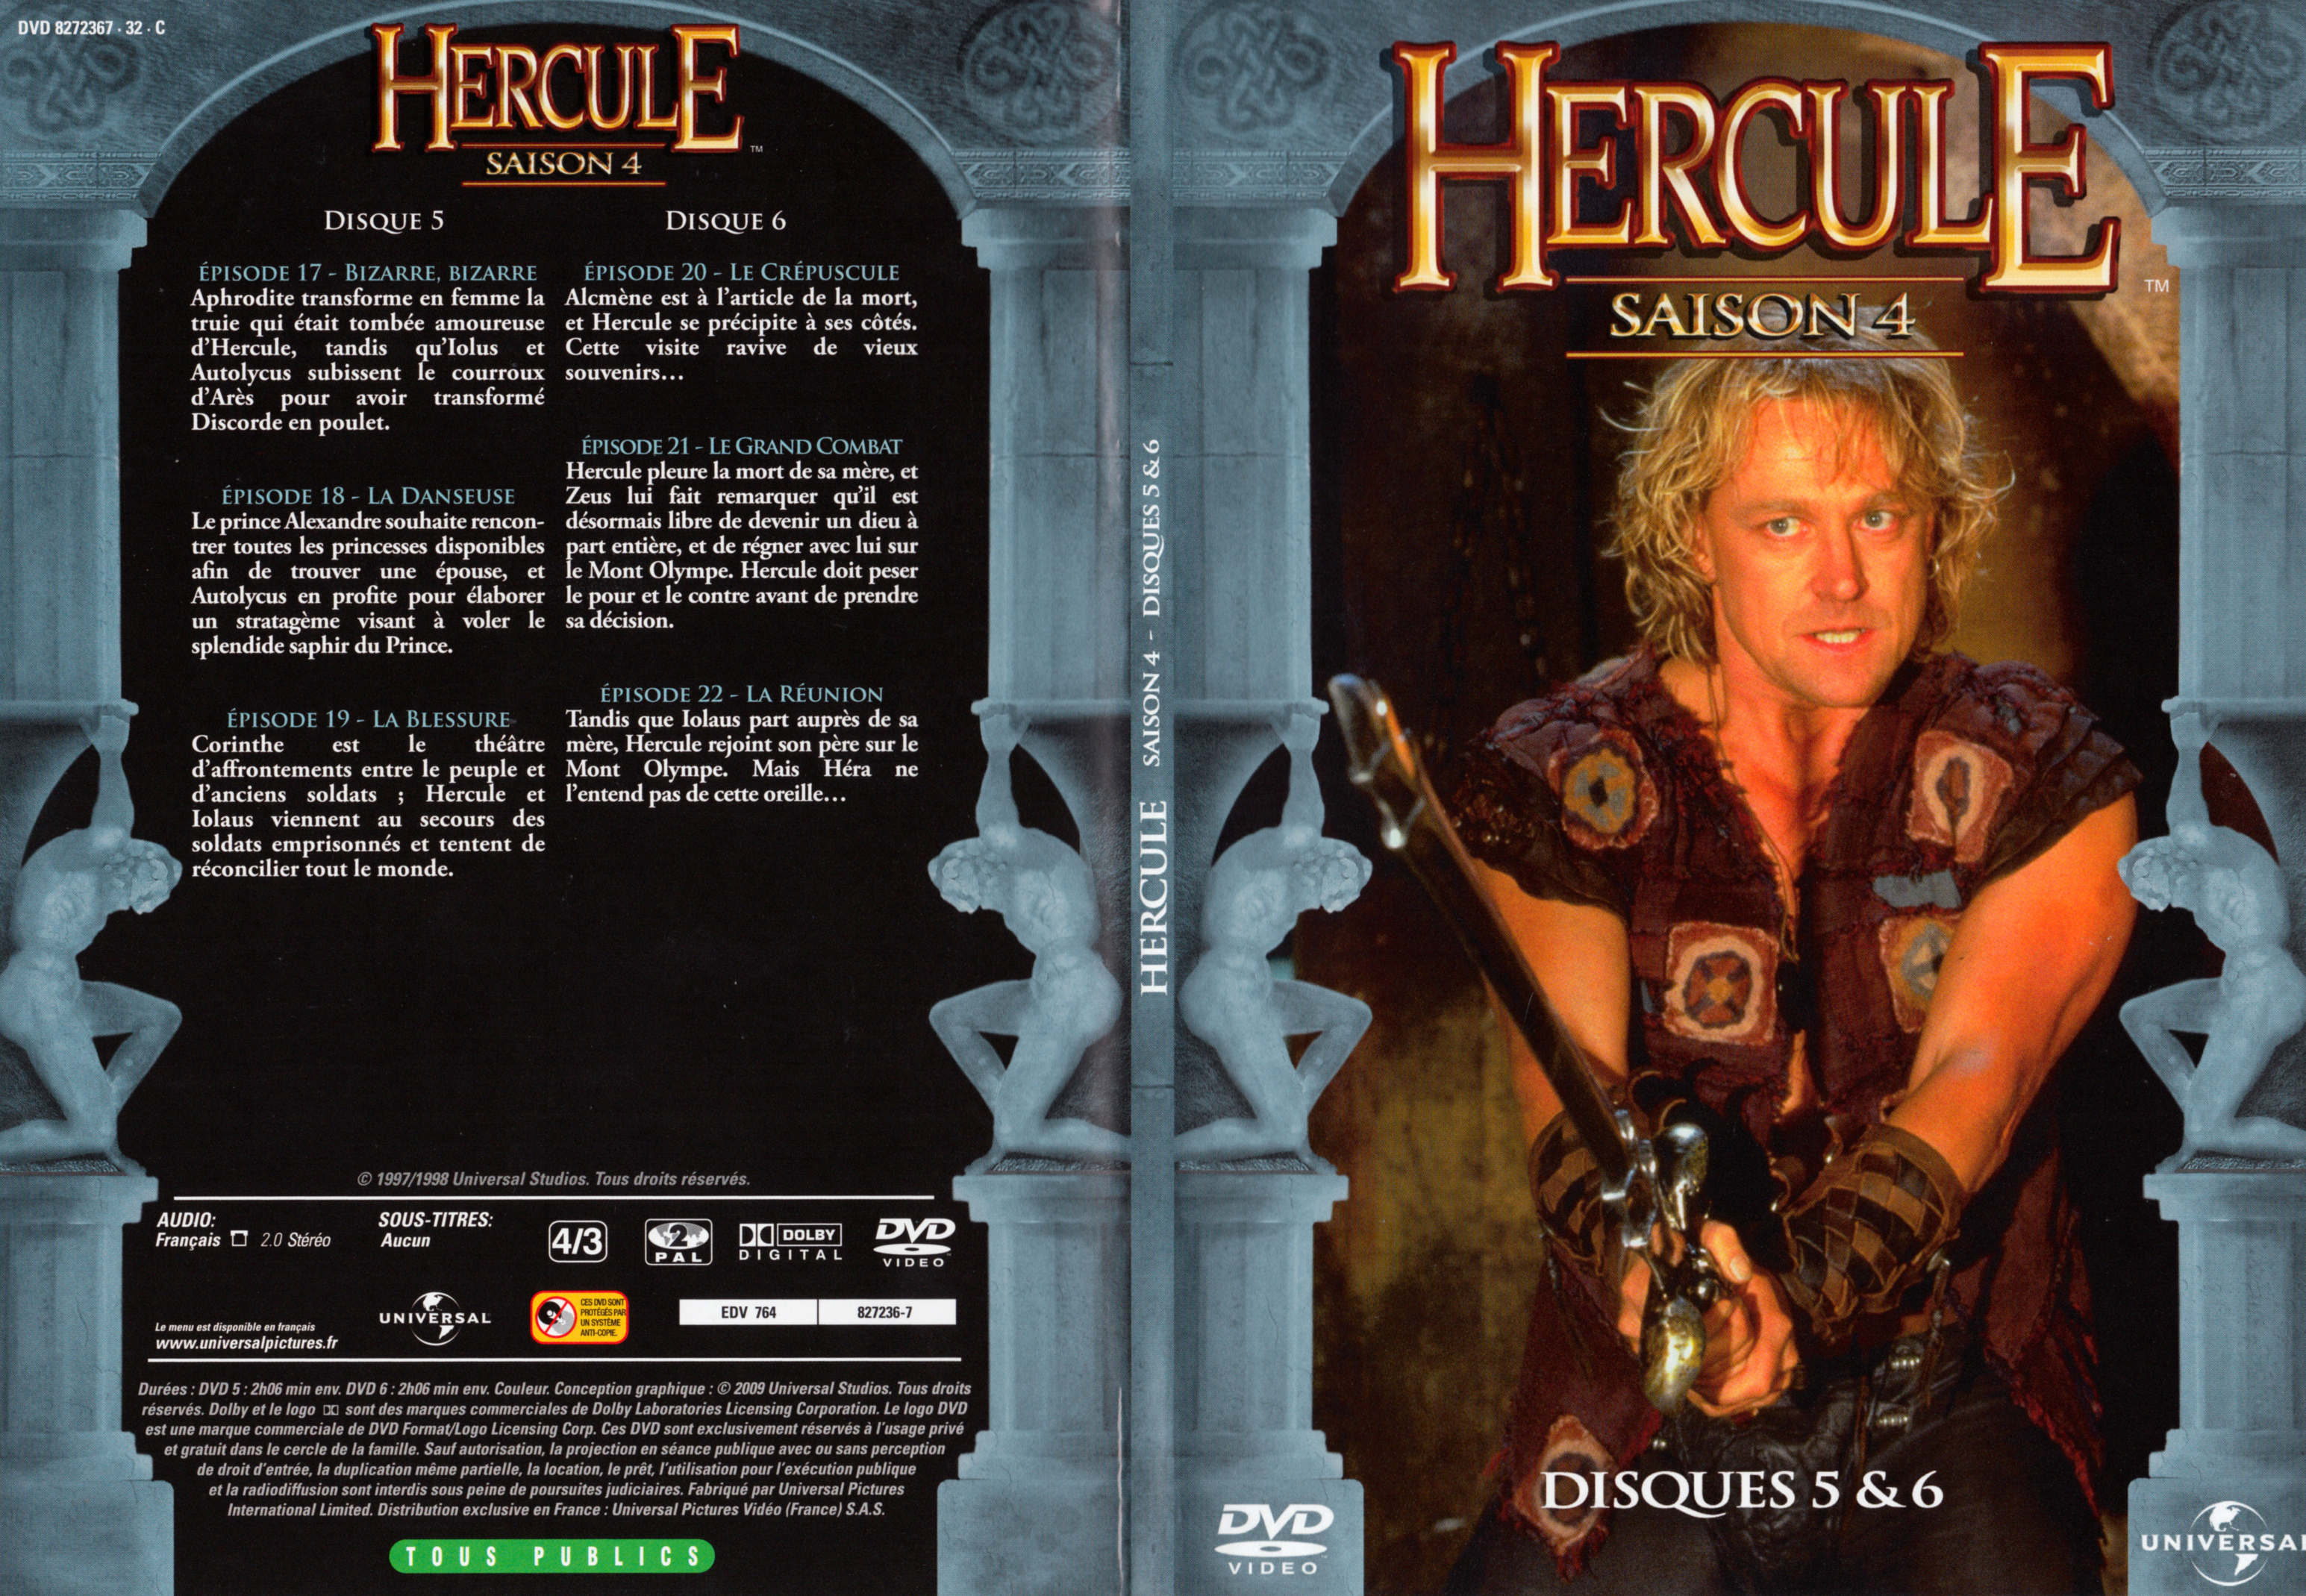 Jaquette DVD Hercule Saison 4 DVD 3